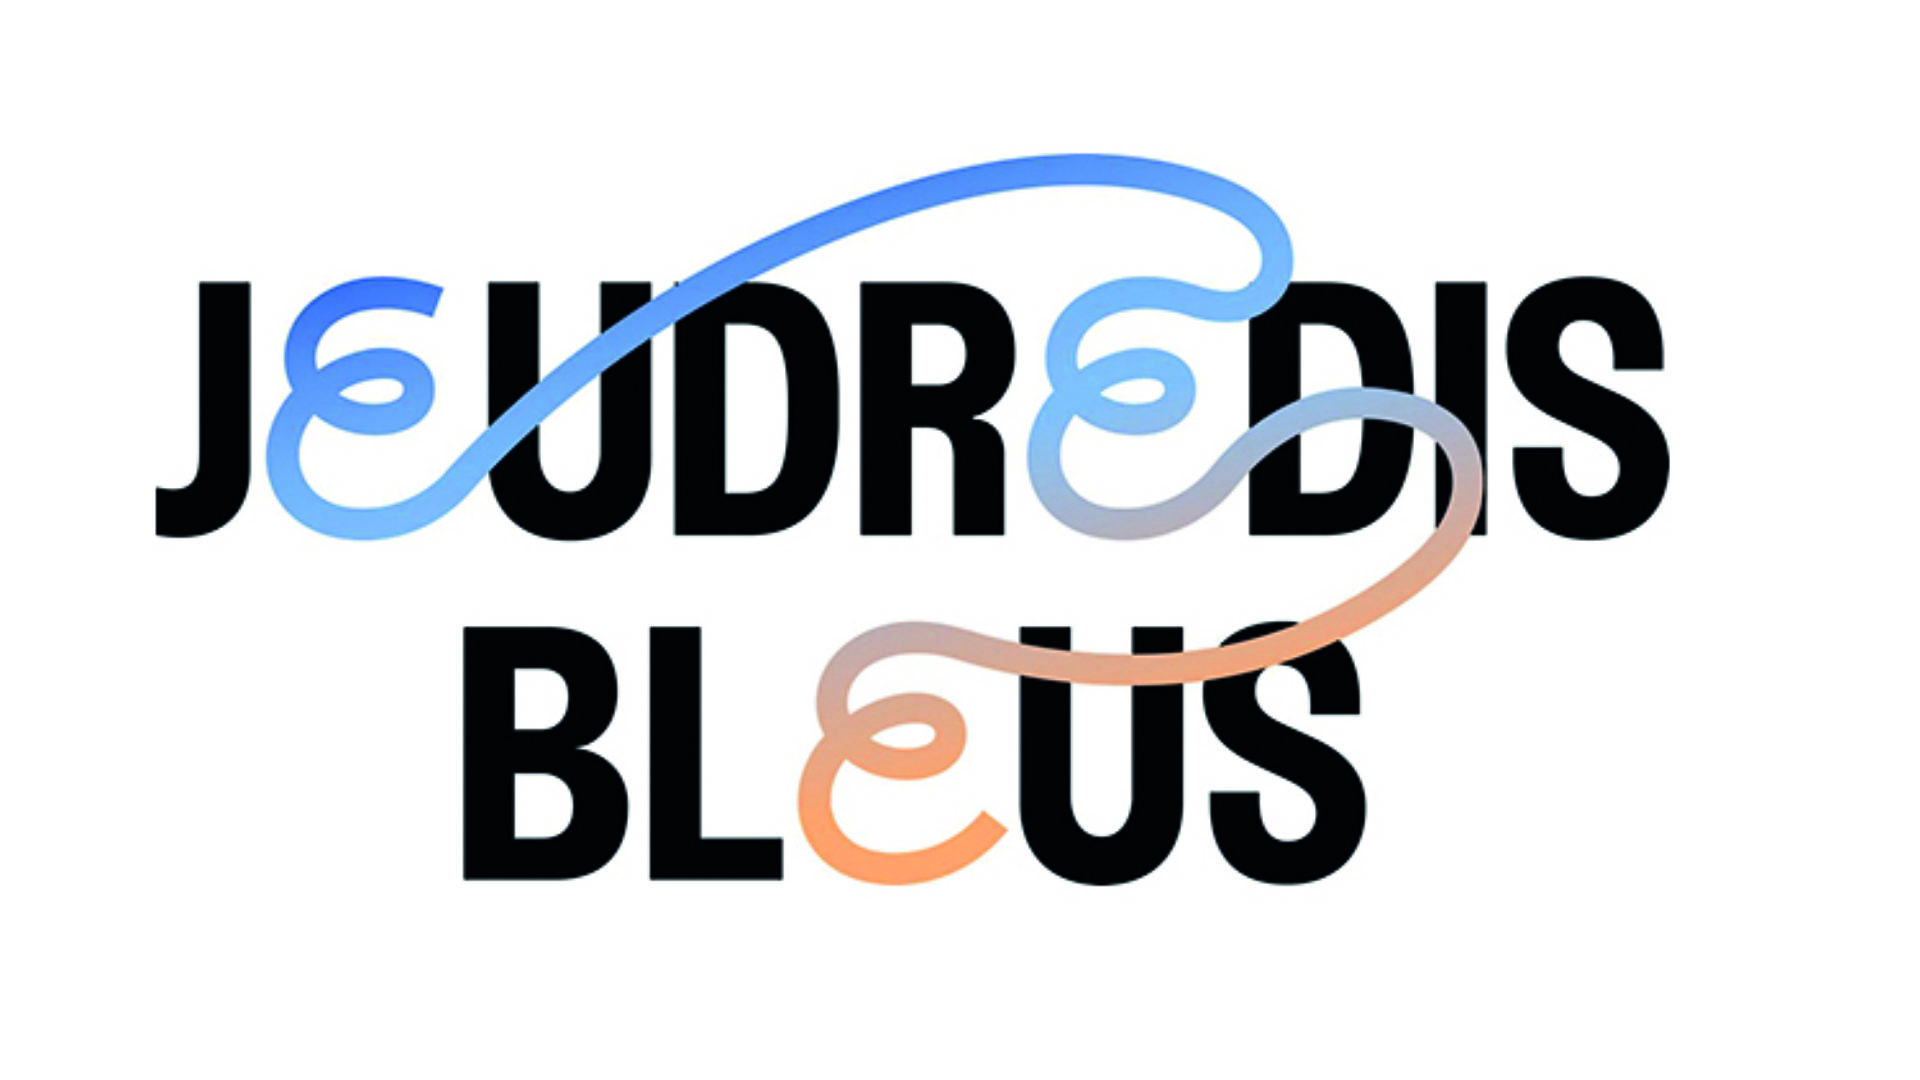 logo_jeudredis copie